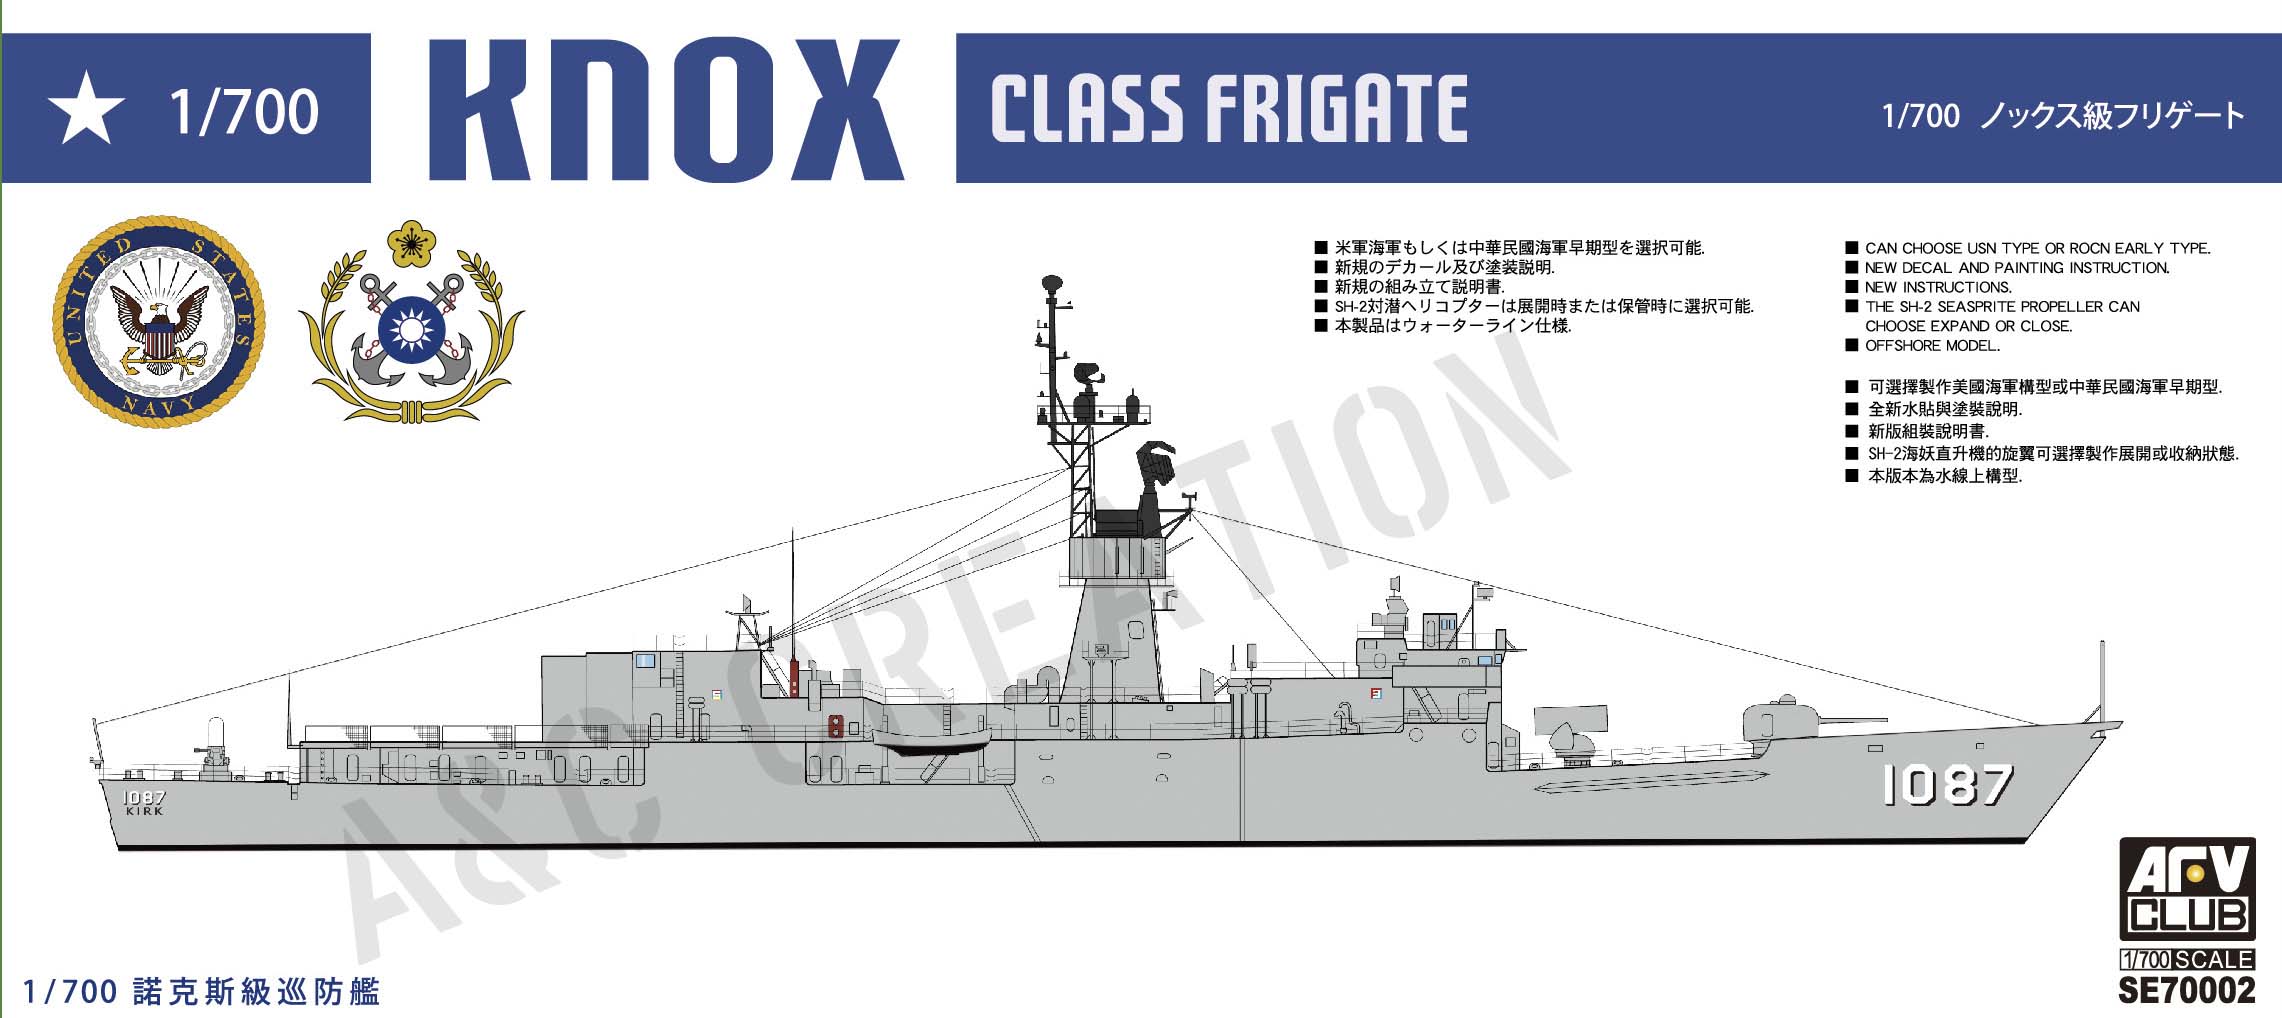 SE70002 Knox Class Frigate FF-1073 Robert E. Peary